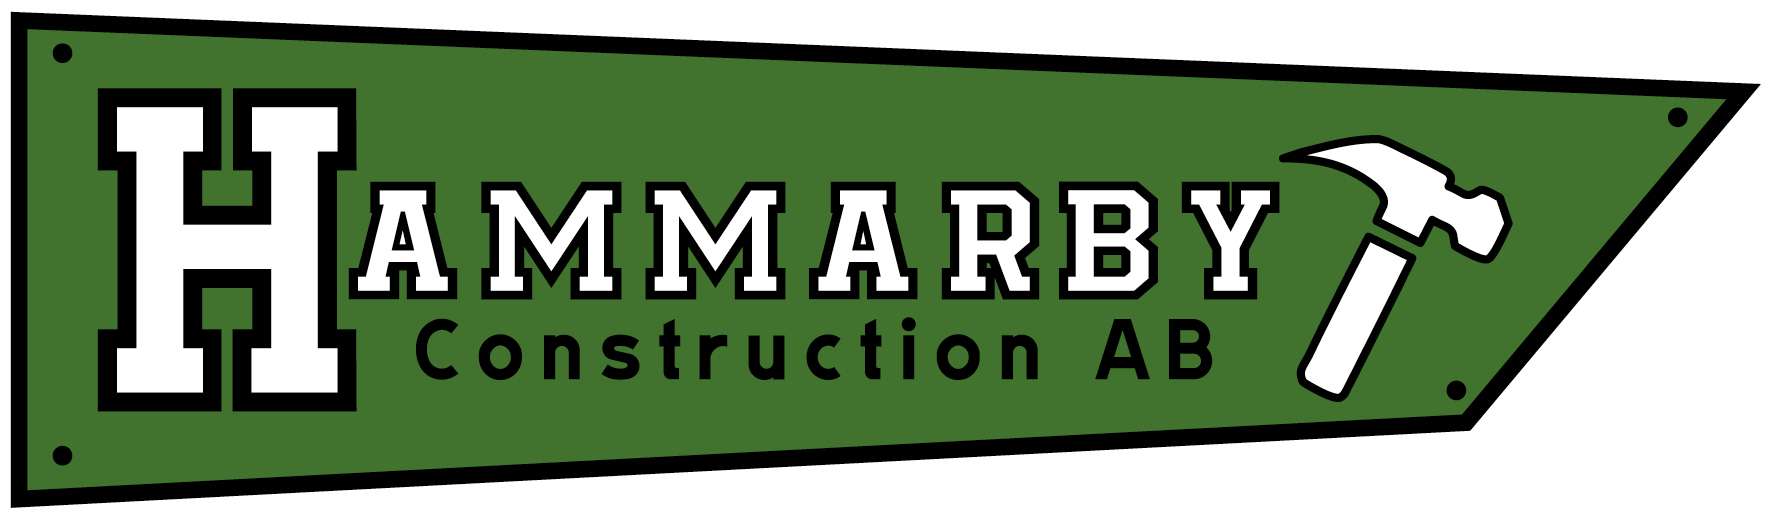 Hammarby construction